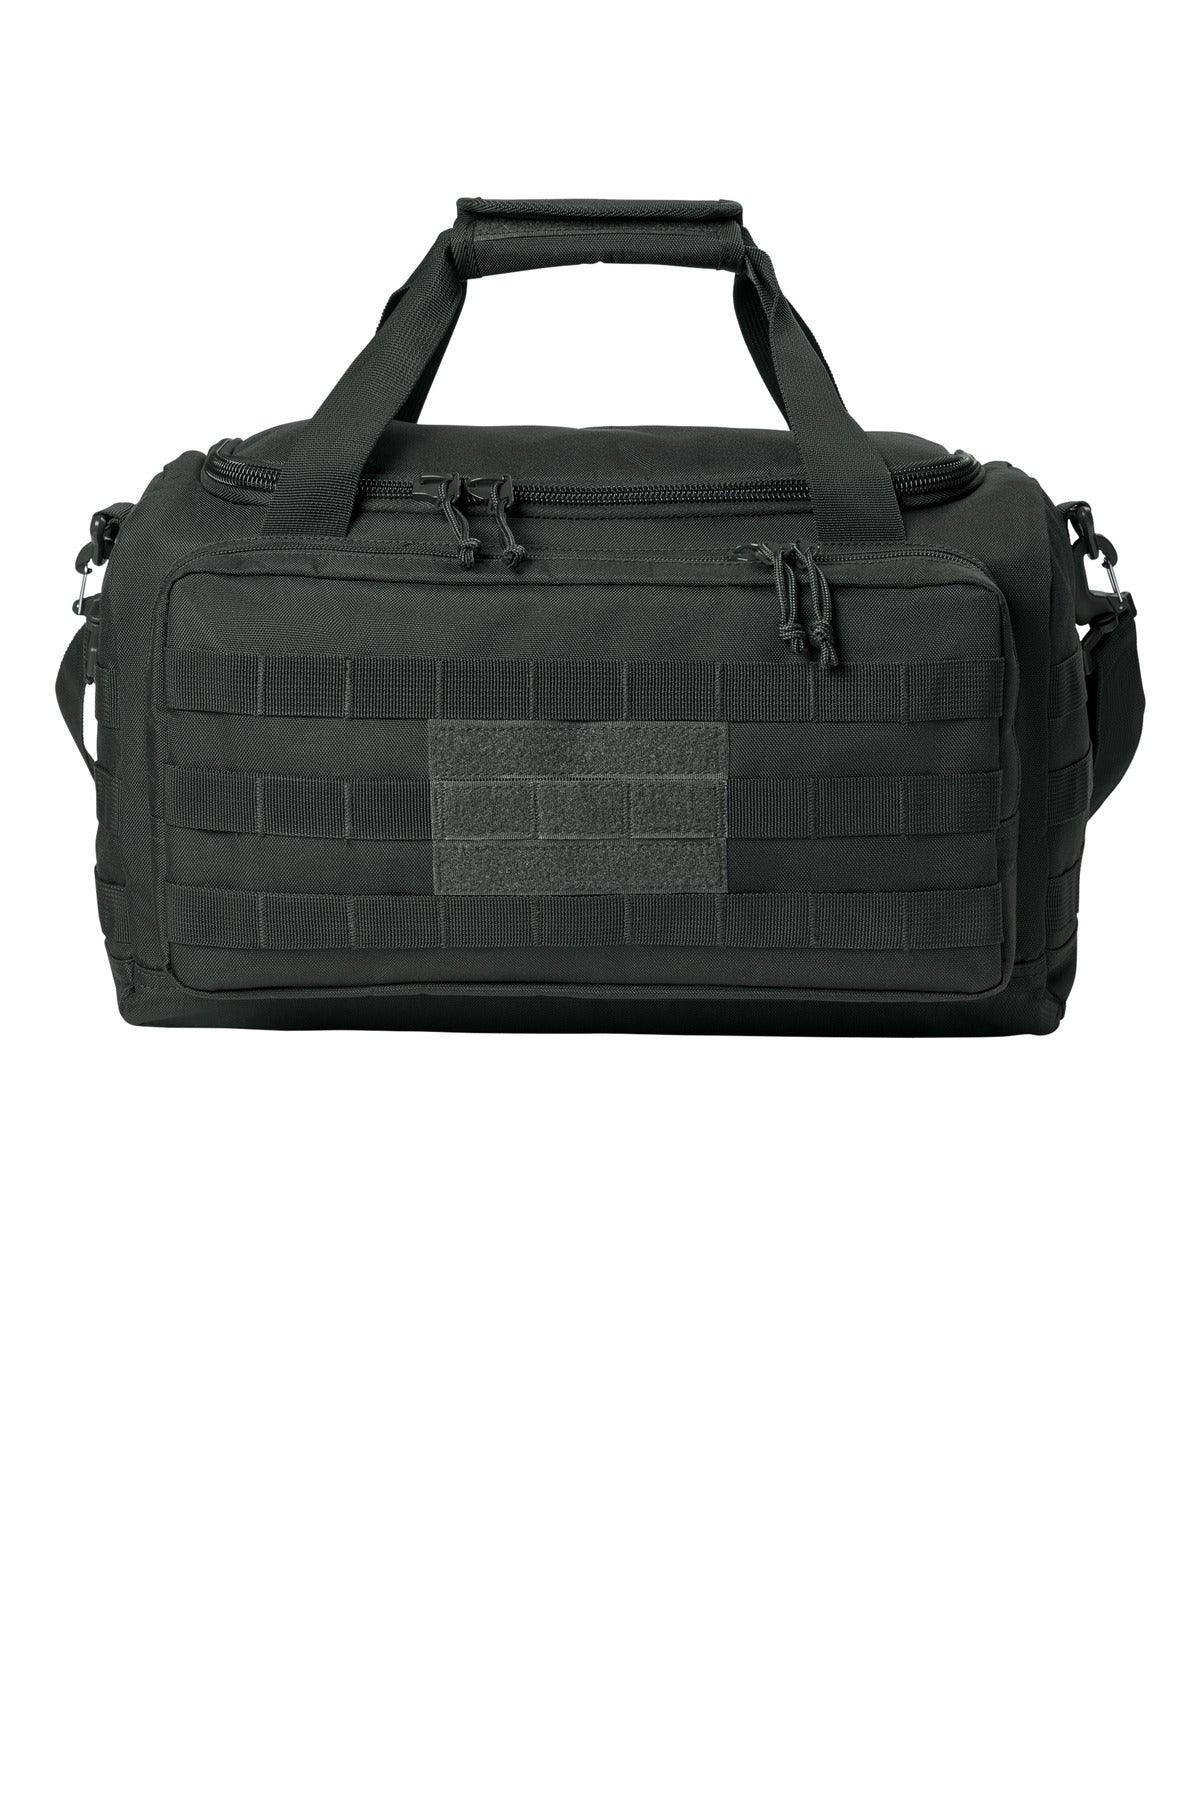 CornerStone Tactical Gear Bag CSB816 - Dresses Max